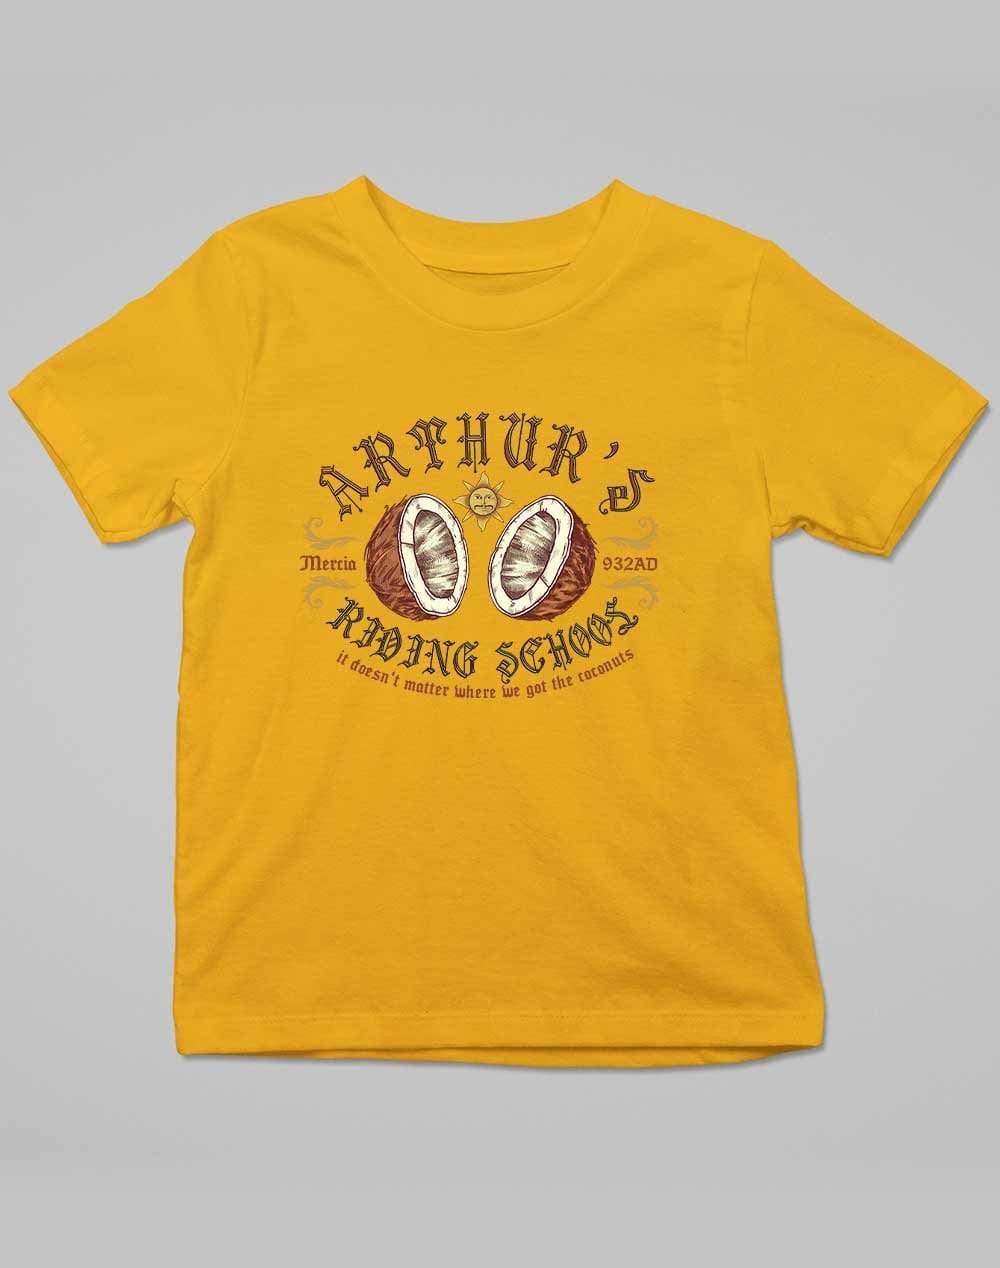 King Arthur's Riding School Kids T-Shirt 3-4 years / Gold  - Off World Tees